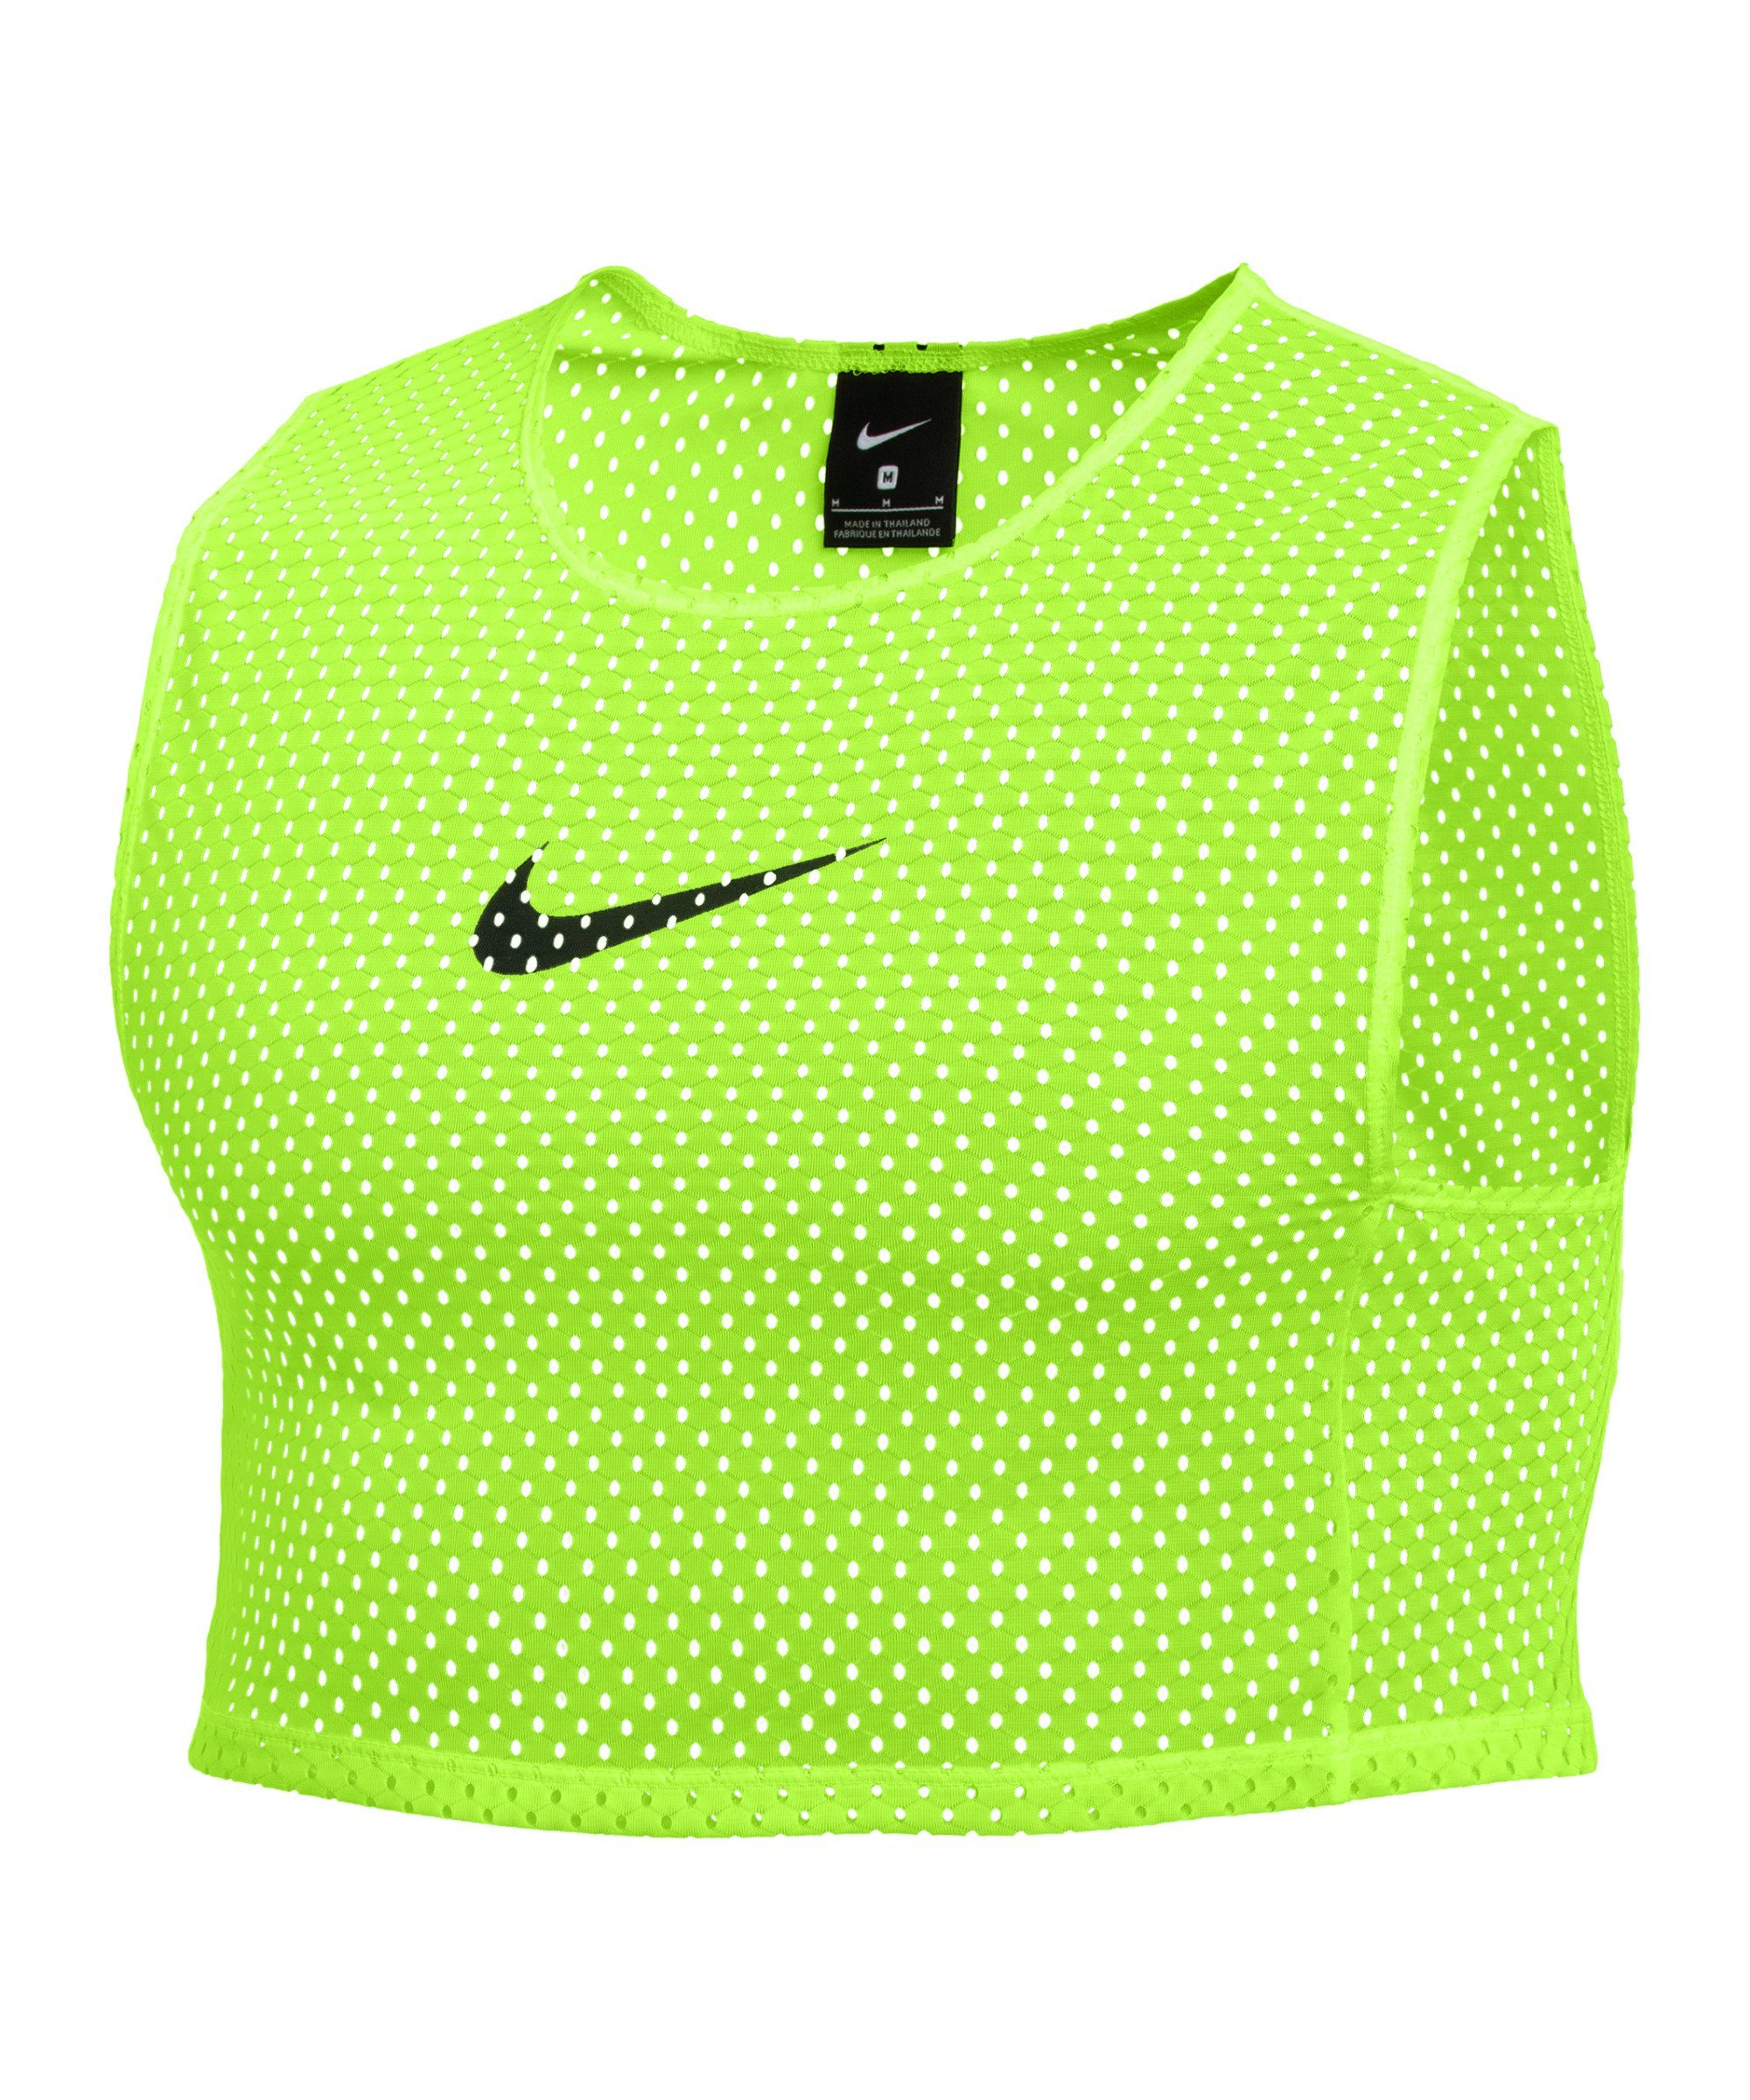 Nike Sporttasche »Park Markierungshemdchen 3er Pack Volt«